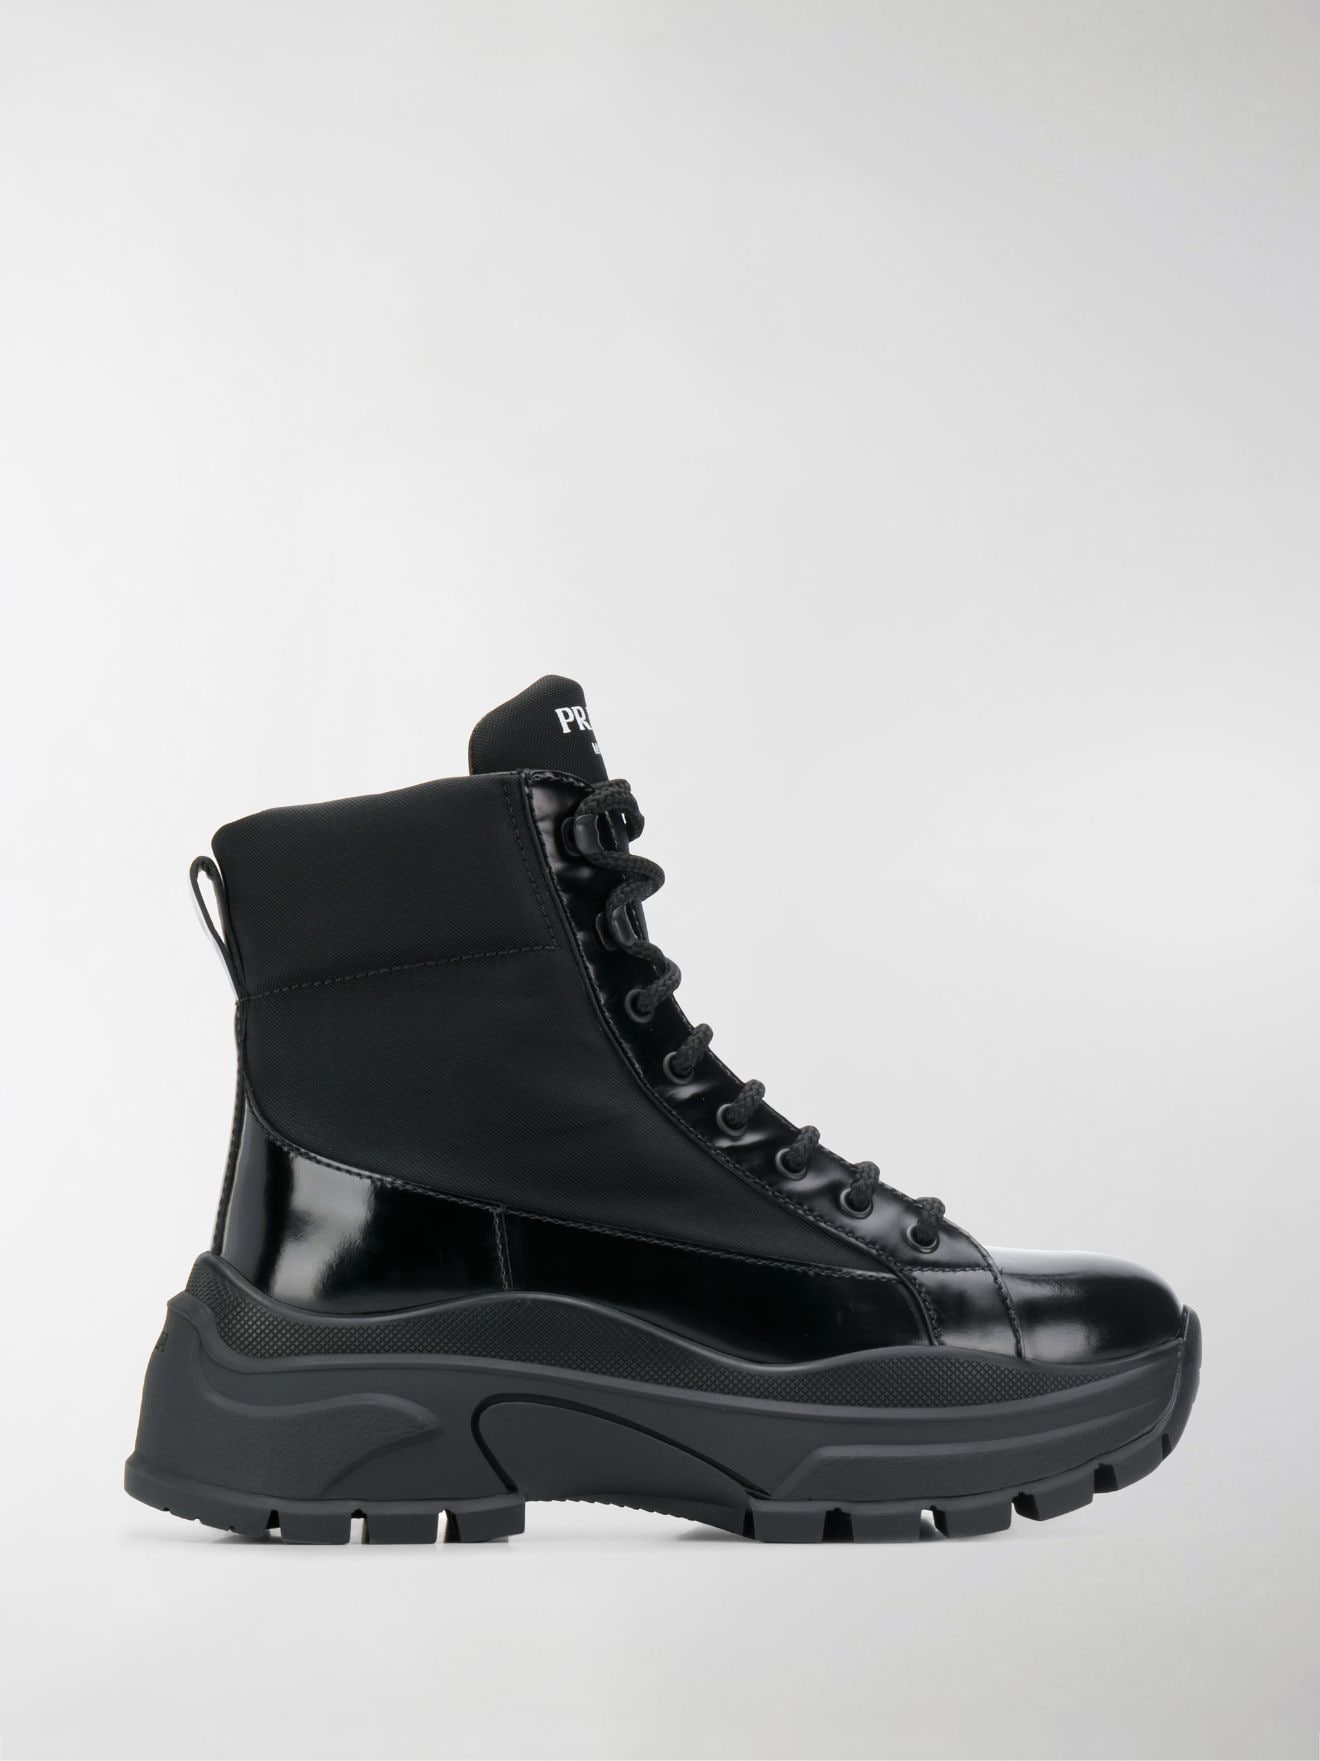 Prada platform combat boots black | MODES